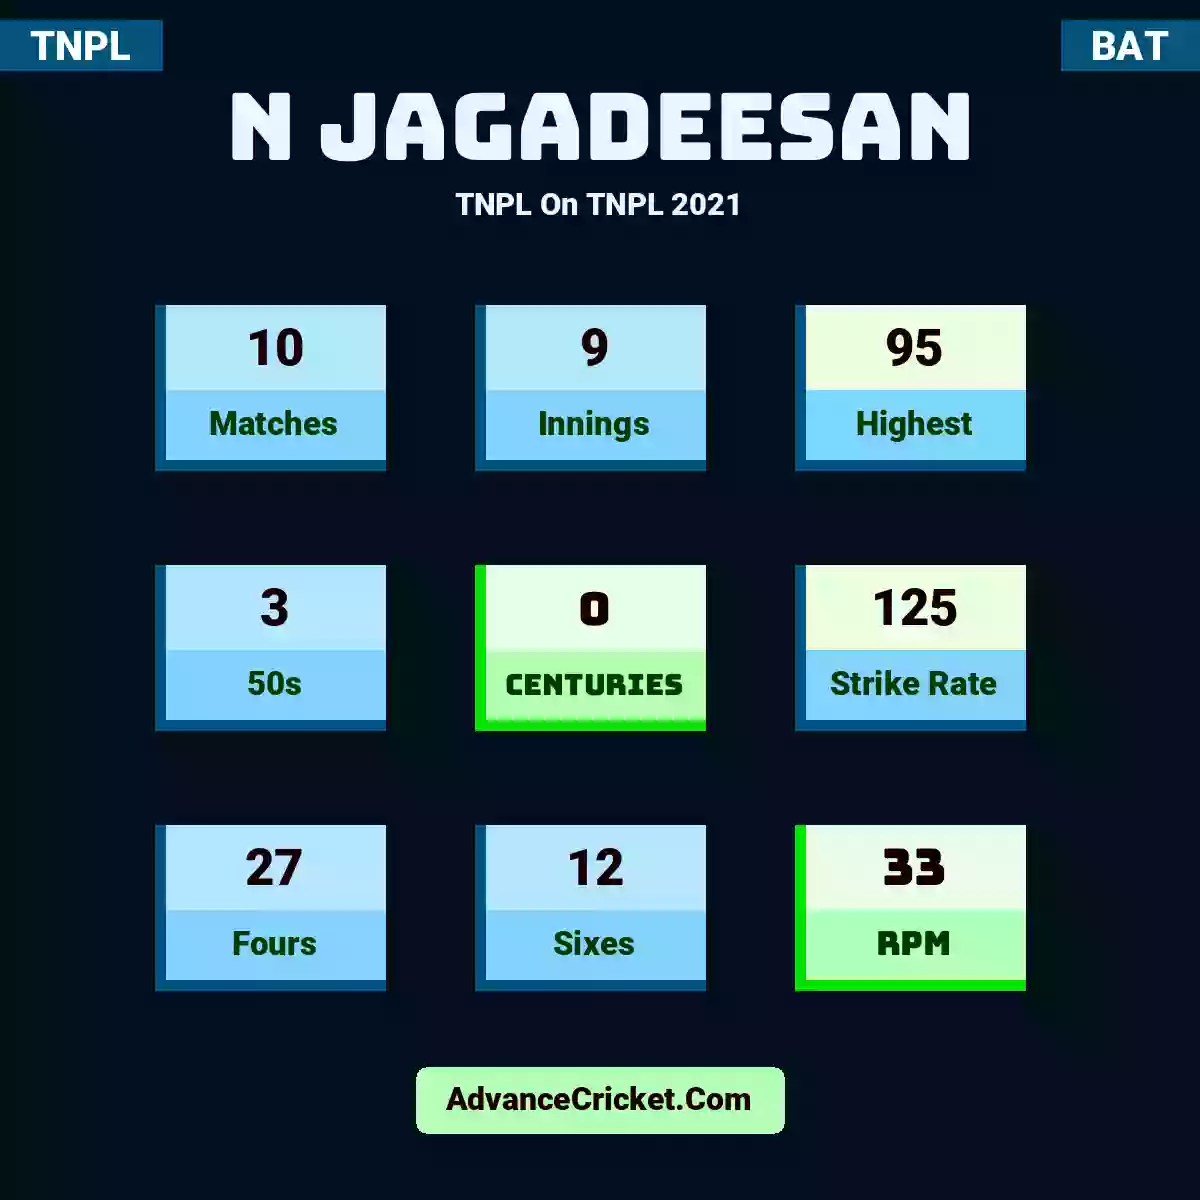 N Jagadeesan TNPL  On TNPL 2021, N Jagadeesan played 10 matches, scored 95 runs as highest, 3 half-centuries, and 0 centuries, with a strike rate of 125. N.Jagadeesan hit 27 fours and 12 sixes, with an RPM of 33.